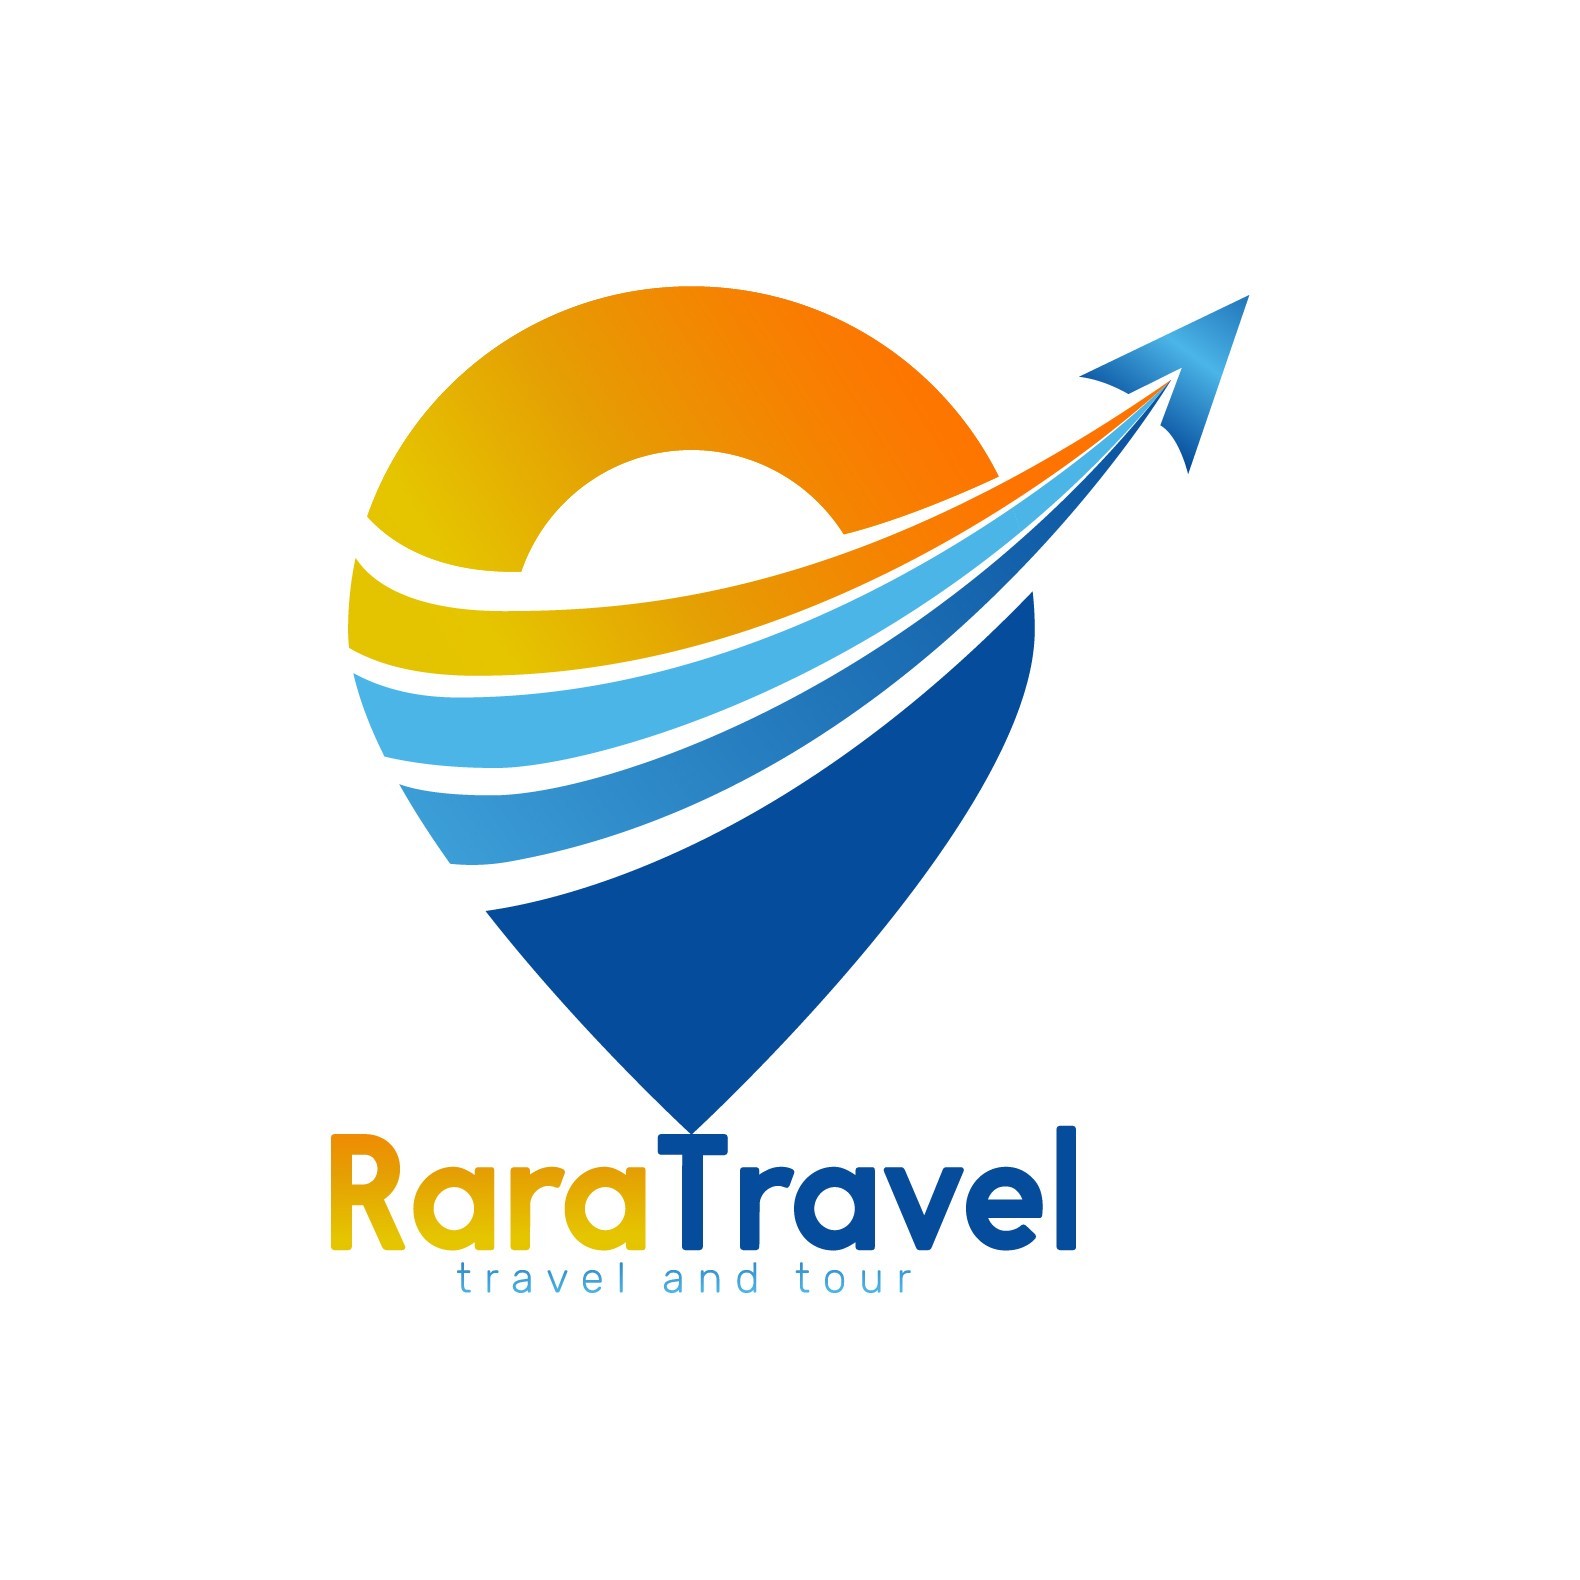 Agen Travel di Indonesia - RARA TRAVEL & TOUR